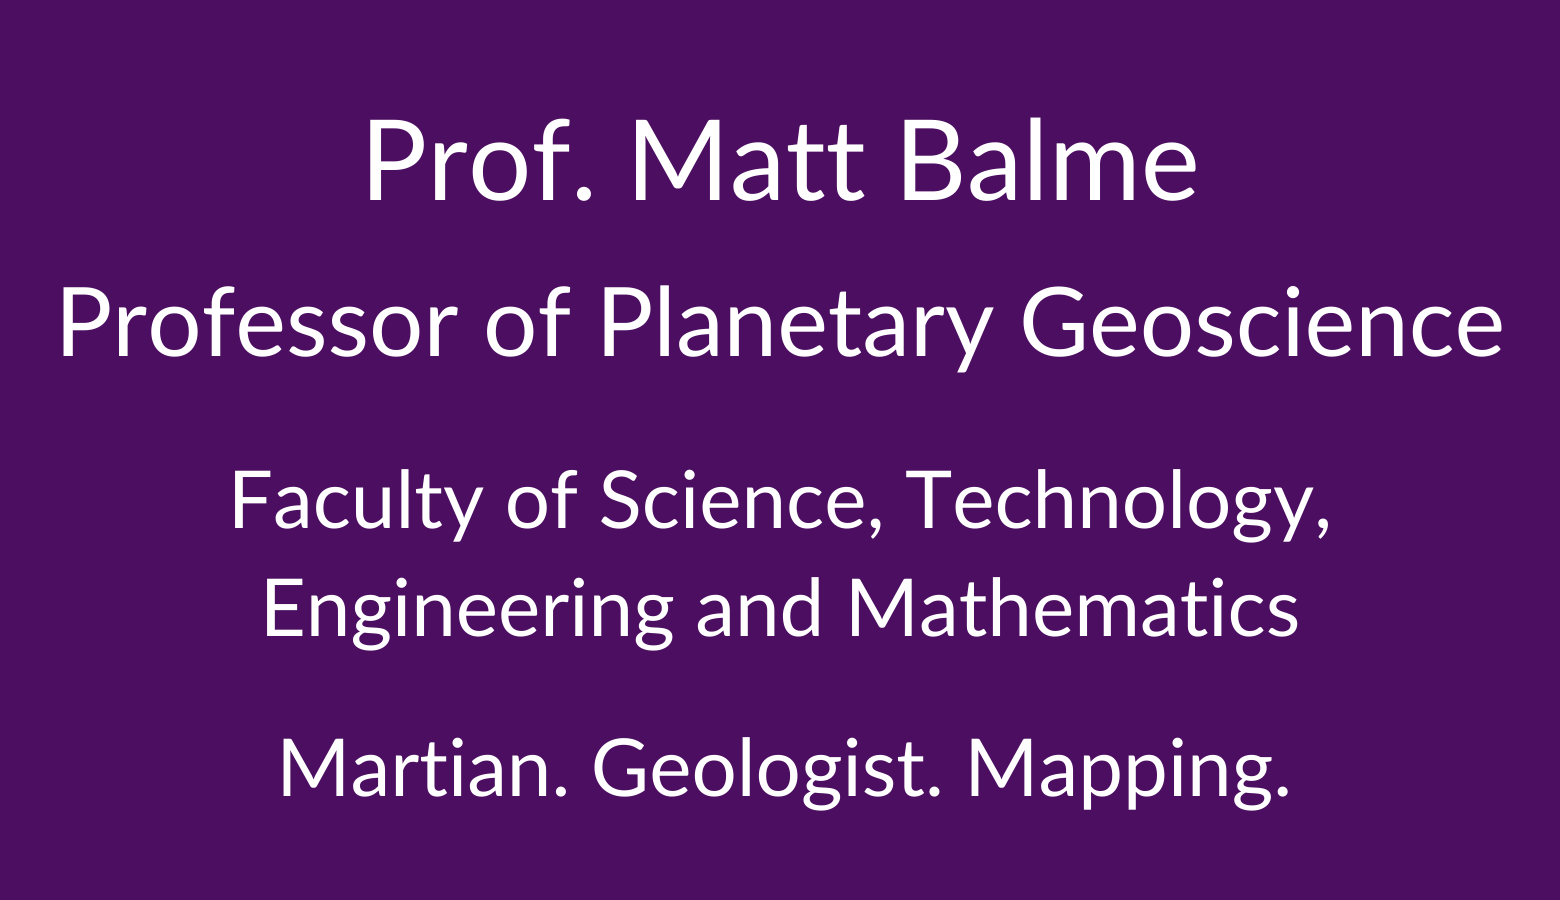 Professor Matt Balme. Professor of Planetary Geoscience. Faculty of Science. Technology, Engineering and Mathematics. Martian. Geologists. Mapping